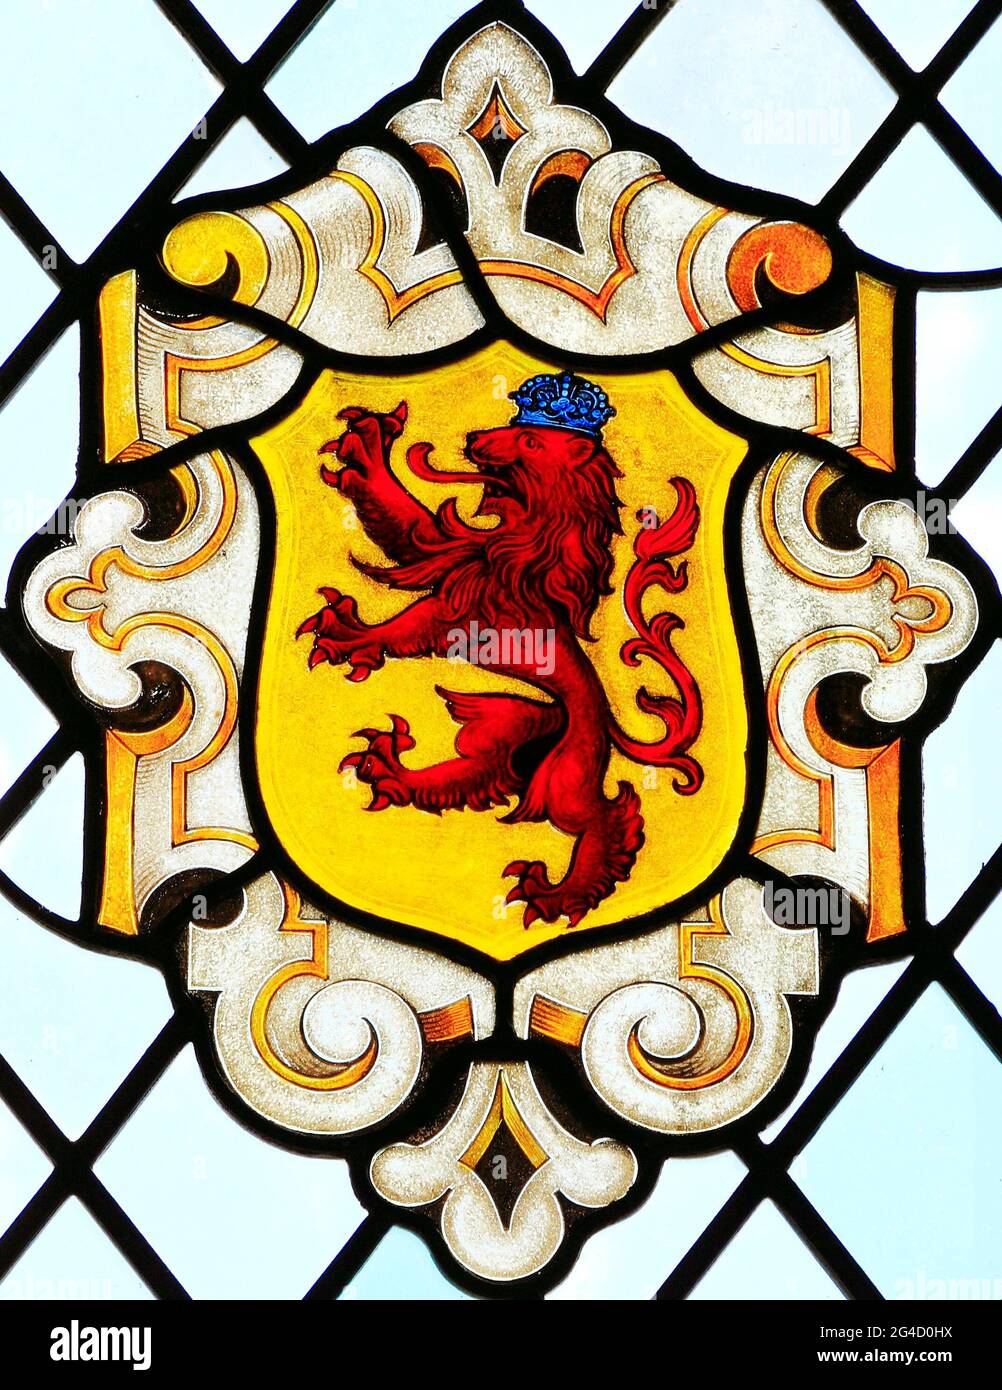 british lion symbols